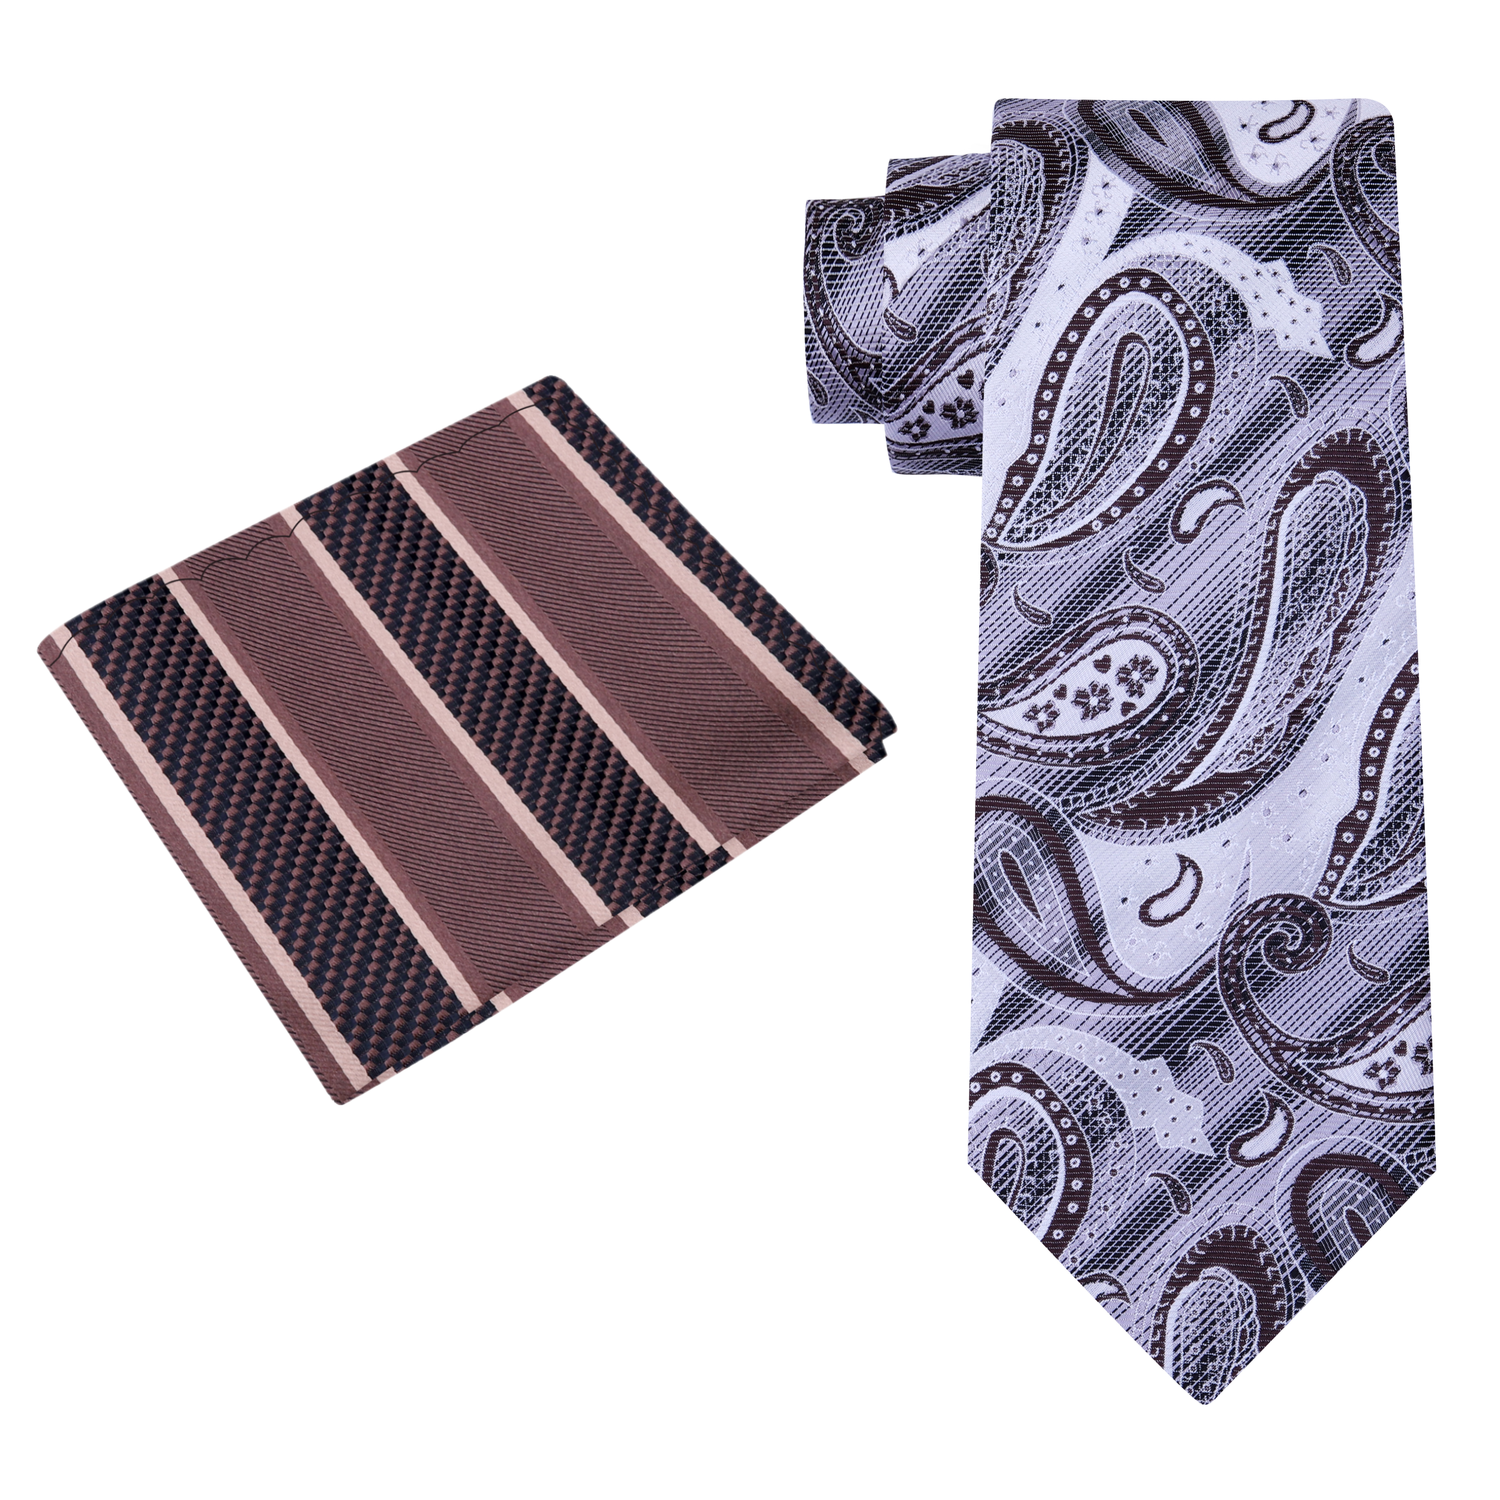 Alt View: A White, Grey, Brown Paisley Pattern Silk Necktie, With Brown Stripe Pocket Square